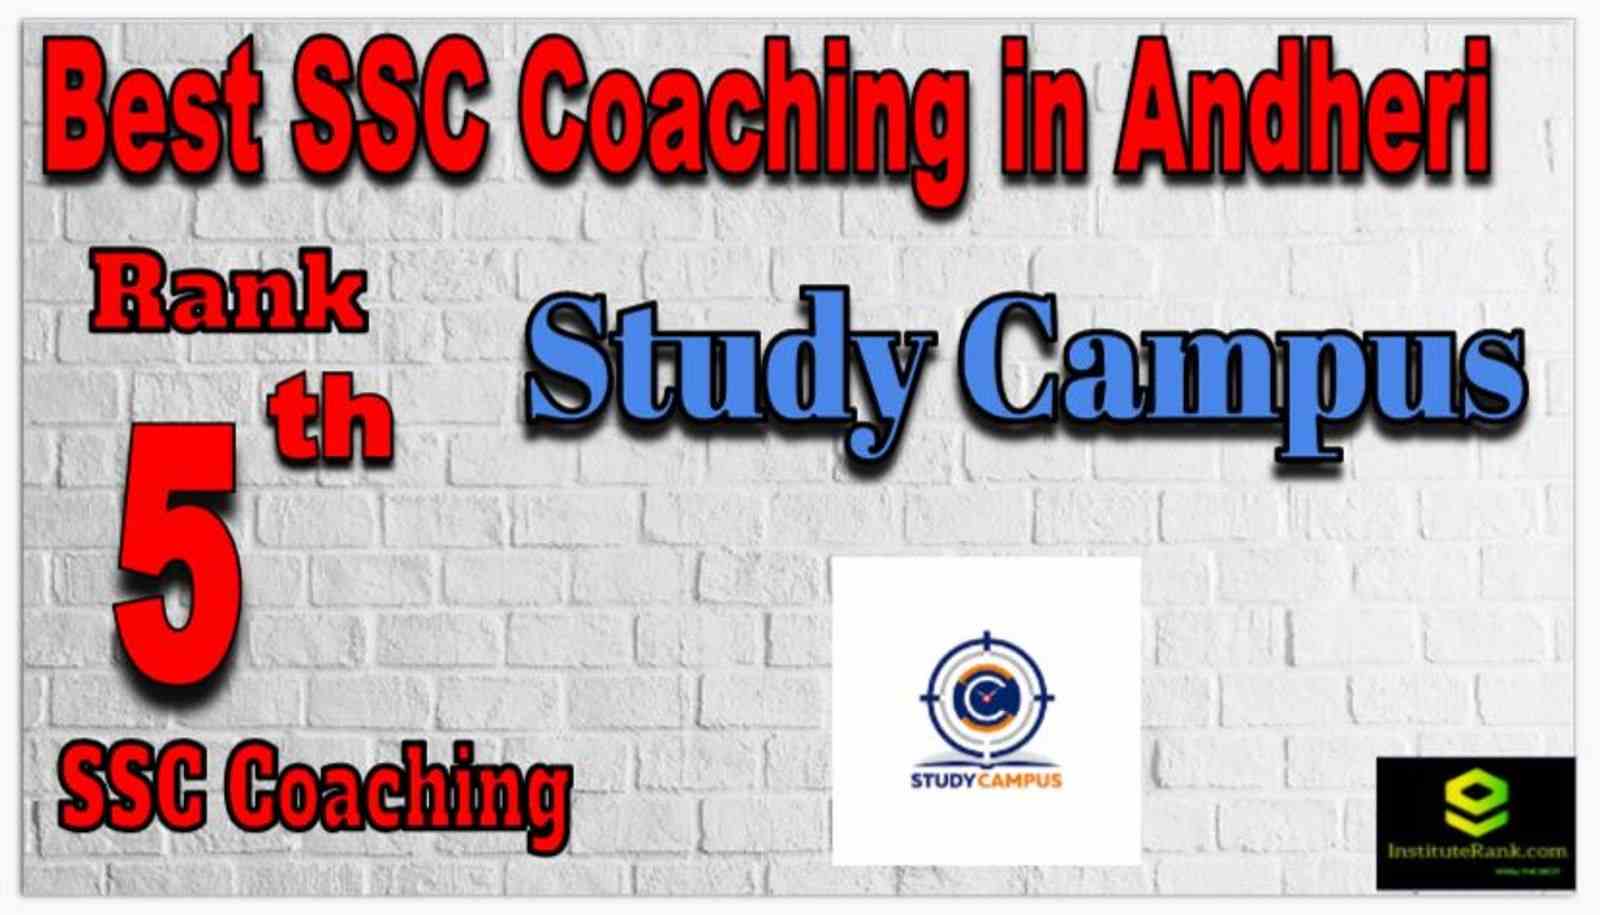 Rank 5 Best SSC Coaching in Andheri